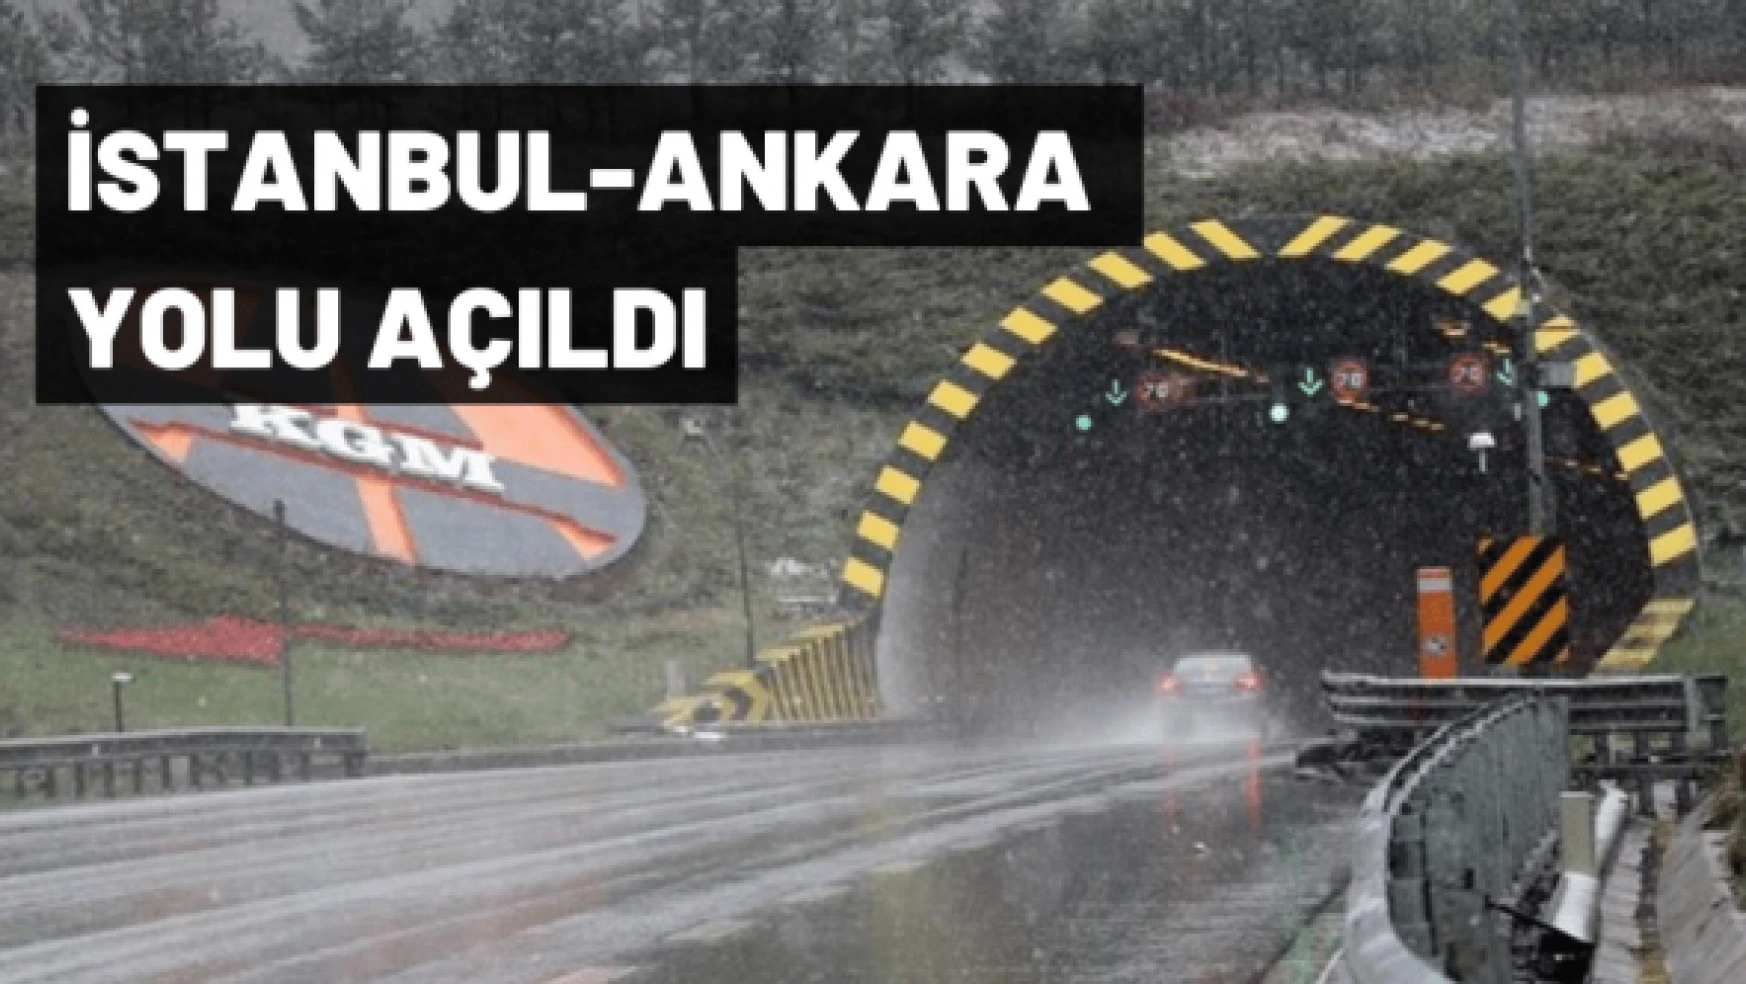 İstanbul-Ankara D-100 kara yolu açıldı